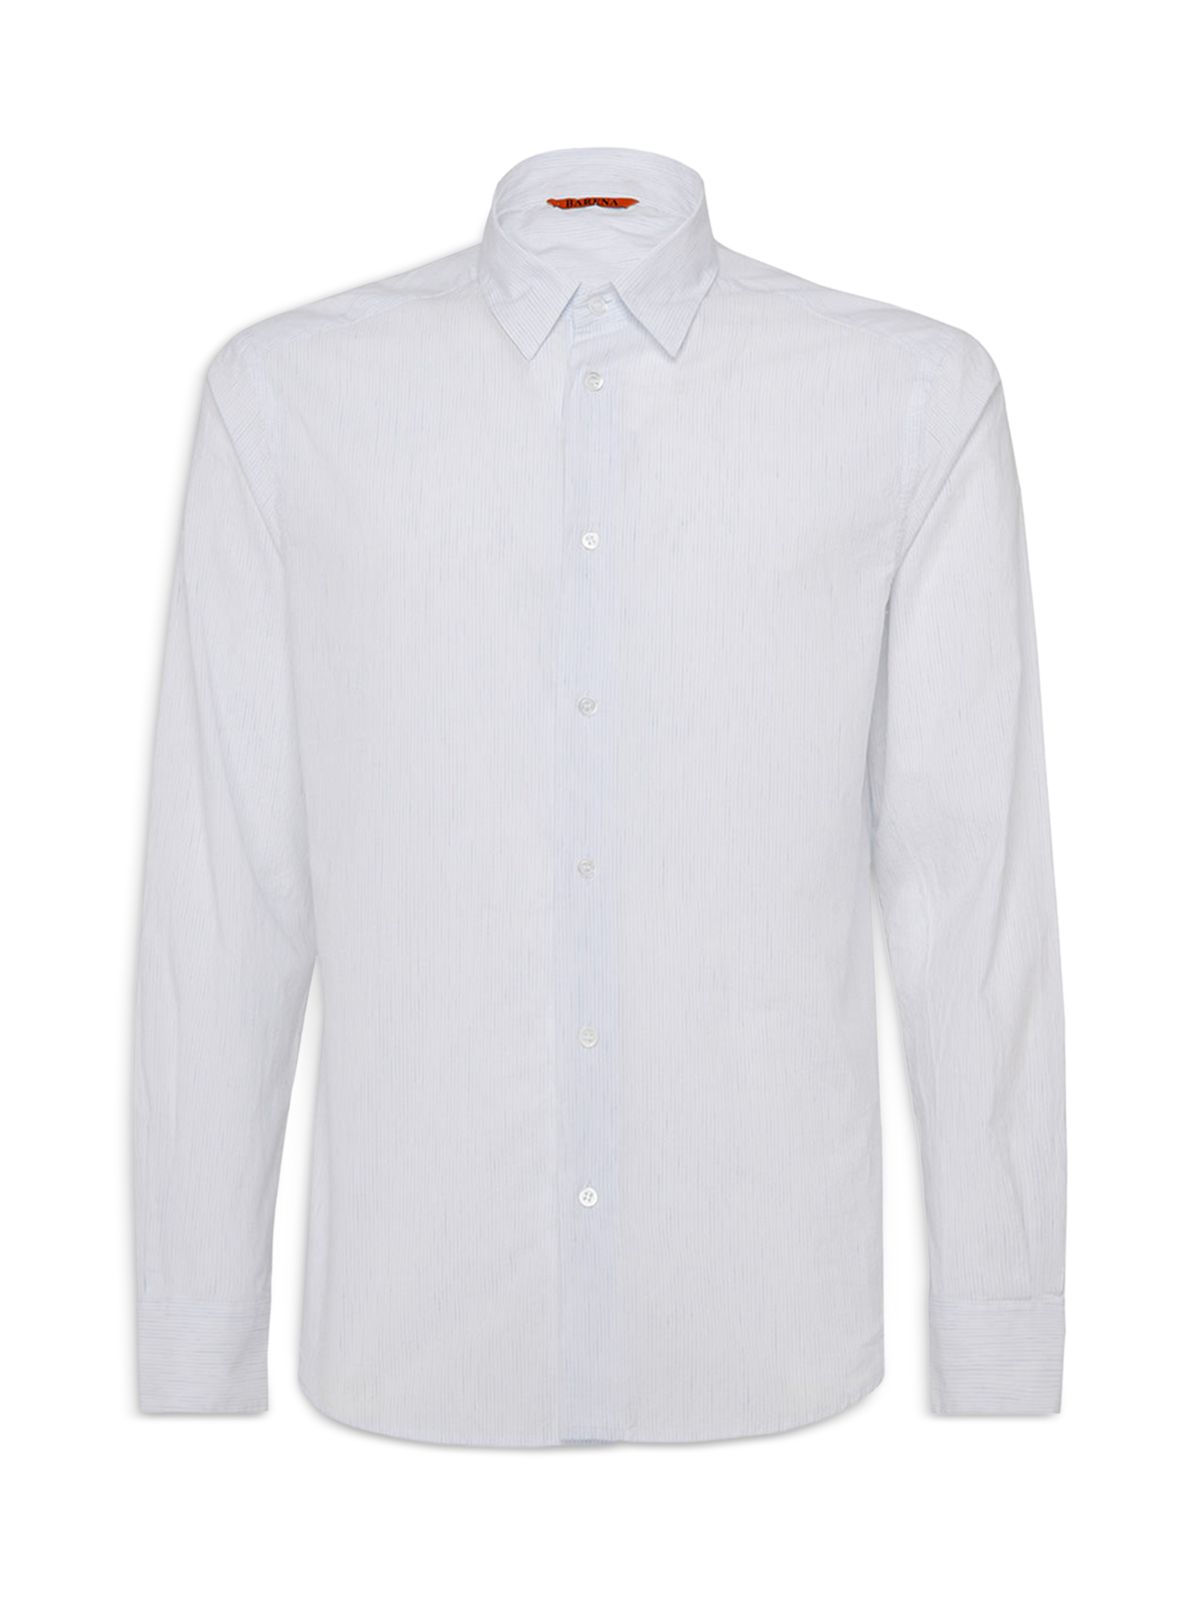 BARIANO Mens White Pinstripe Collared Slim Fit Cotton Blend Dress Shirt 48